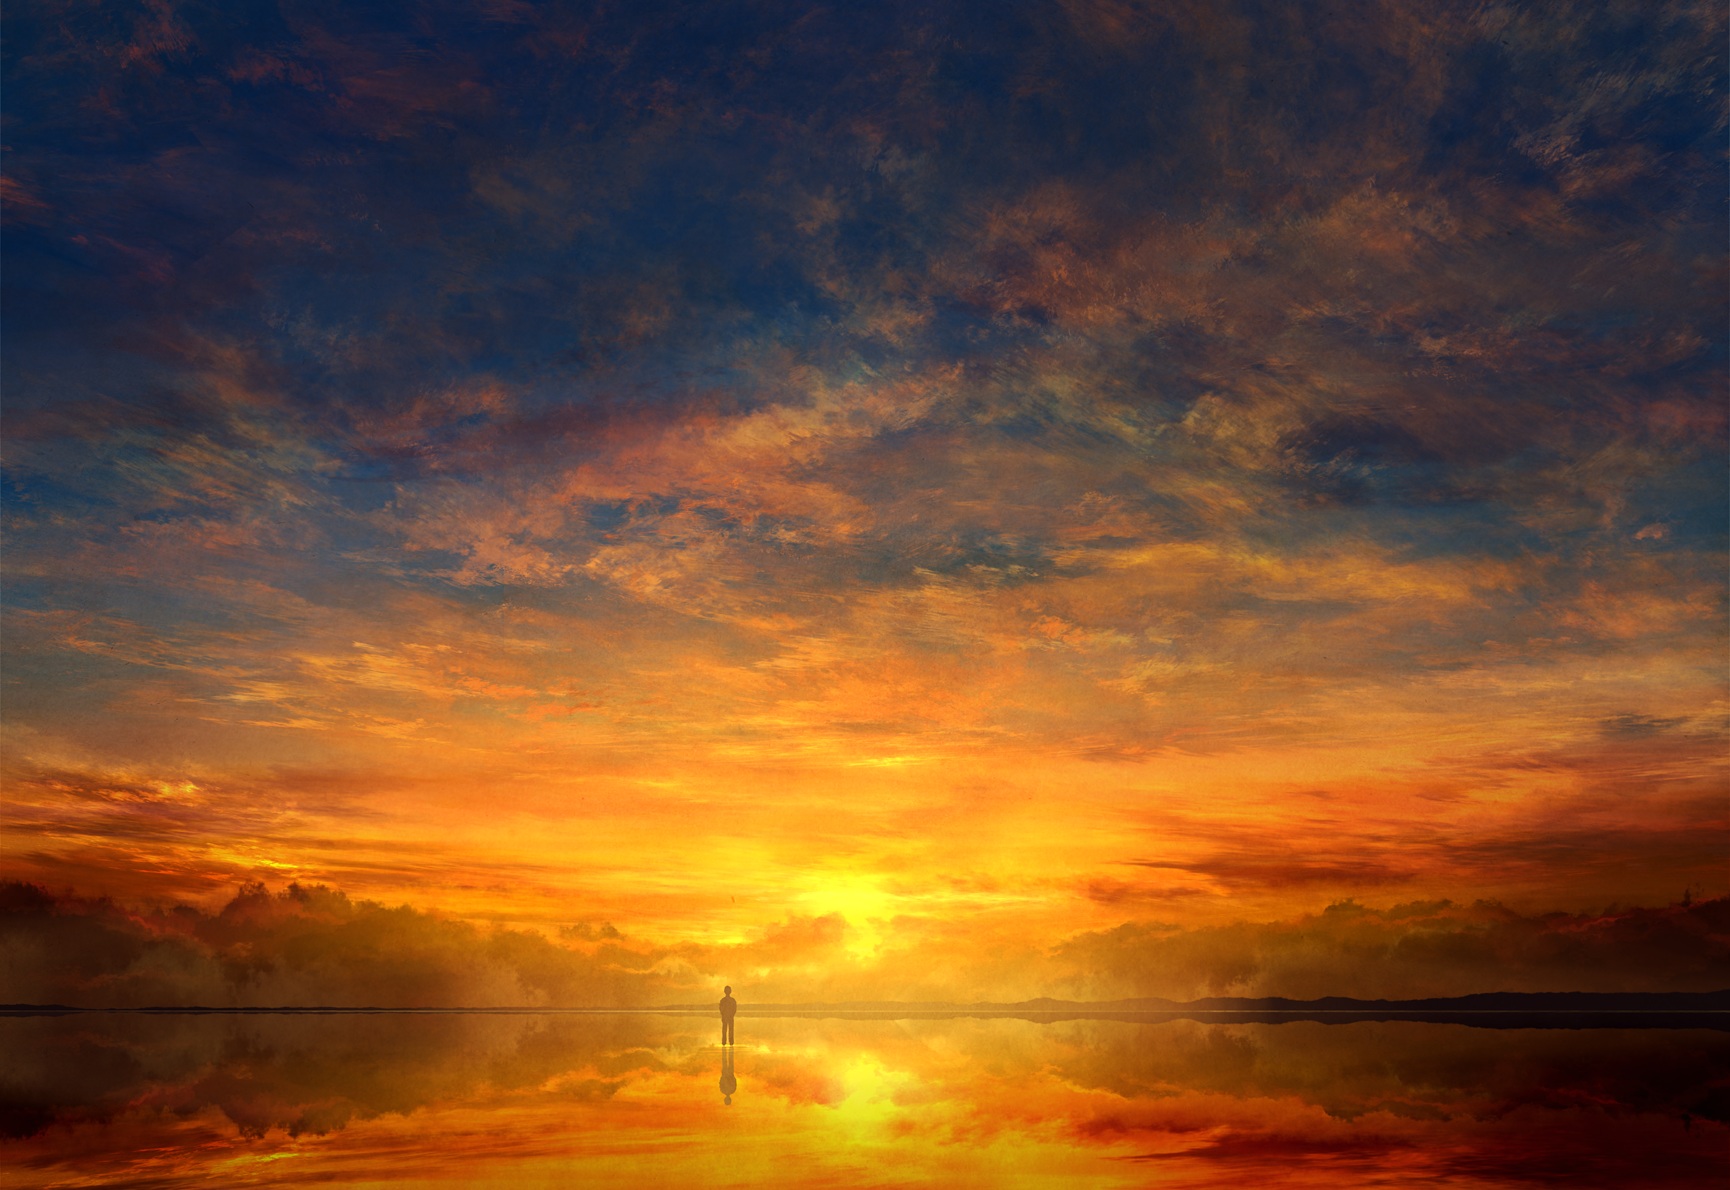 Anime 1730x1190 anime artwork horizon landscape skyscape sky clouds sunlight reflection